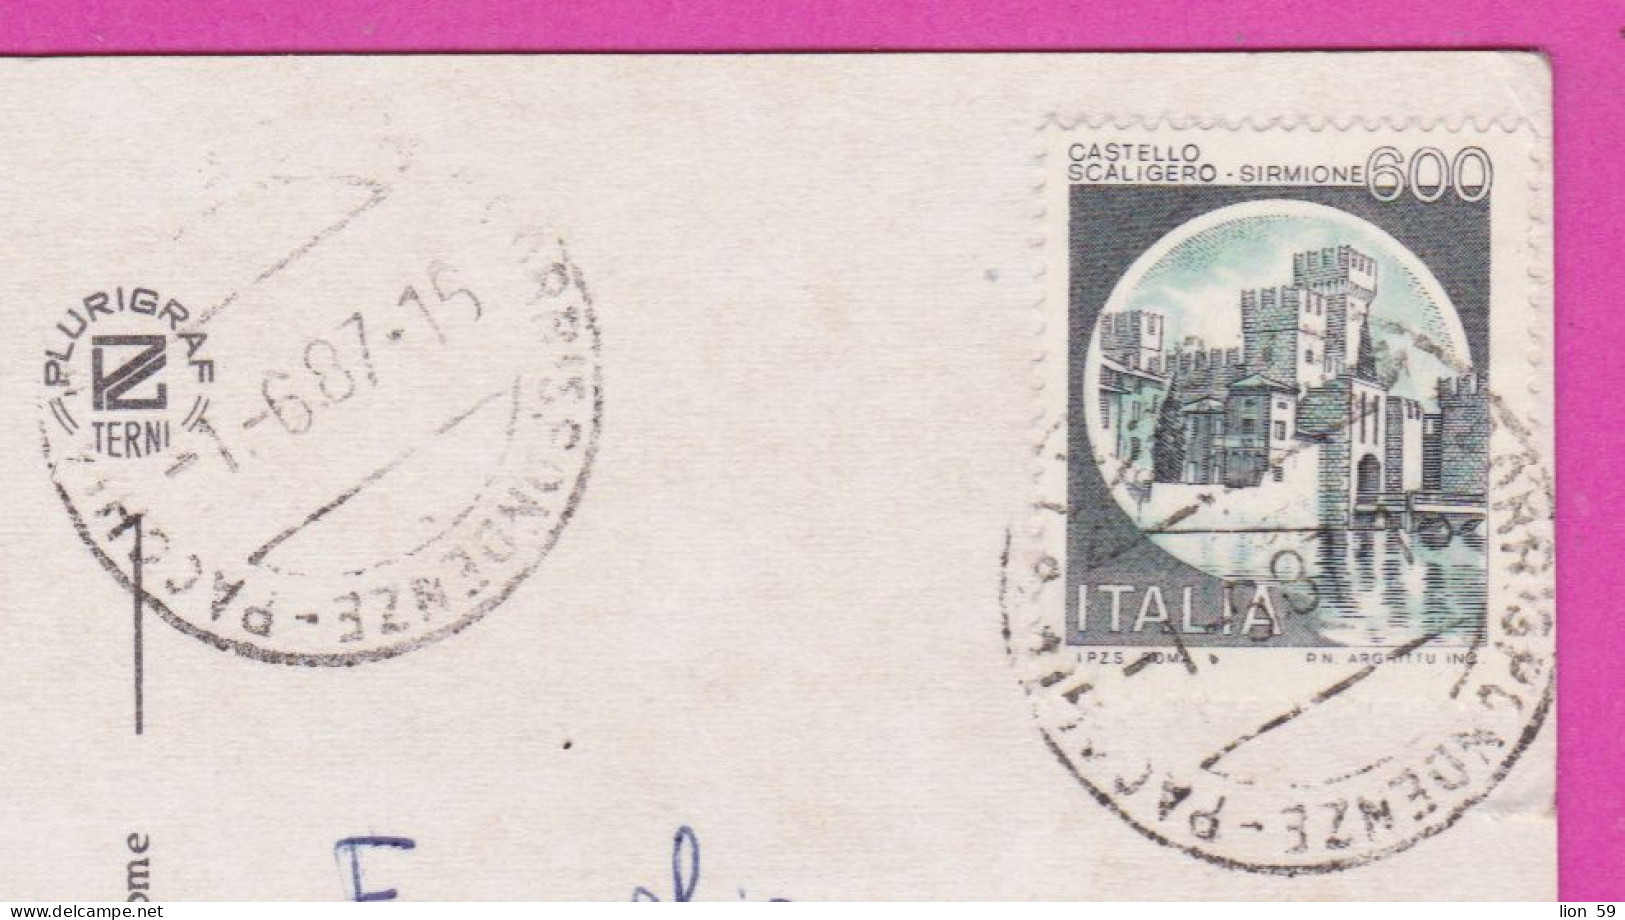 293885 / Italy - Macerata 5 View Panorama PC 1987 USED 600 L Castello Scaligero Di Sirmione , Castle Italia Italie - 1981-90: Poststempel